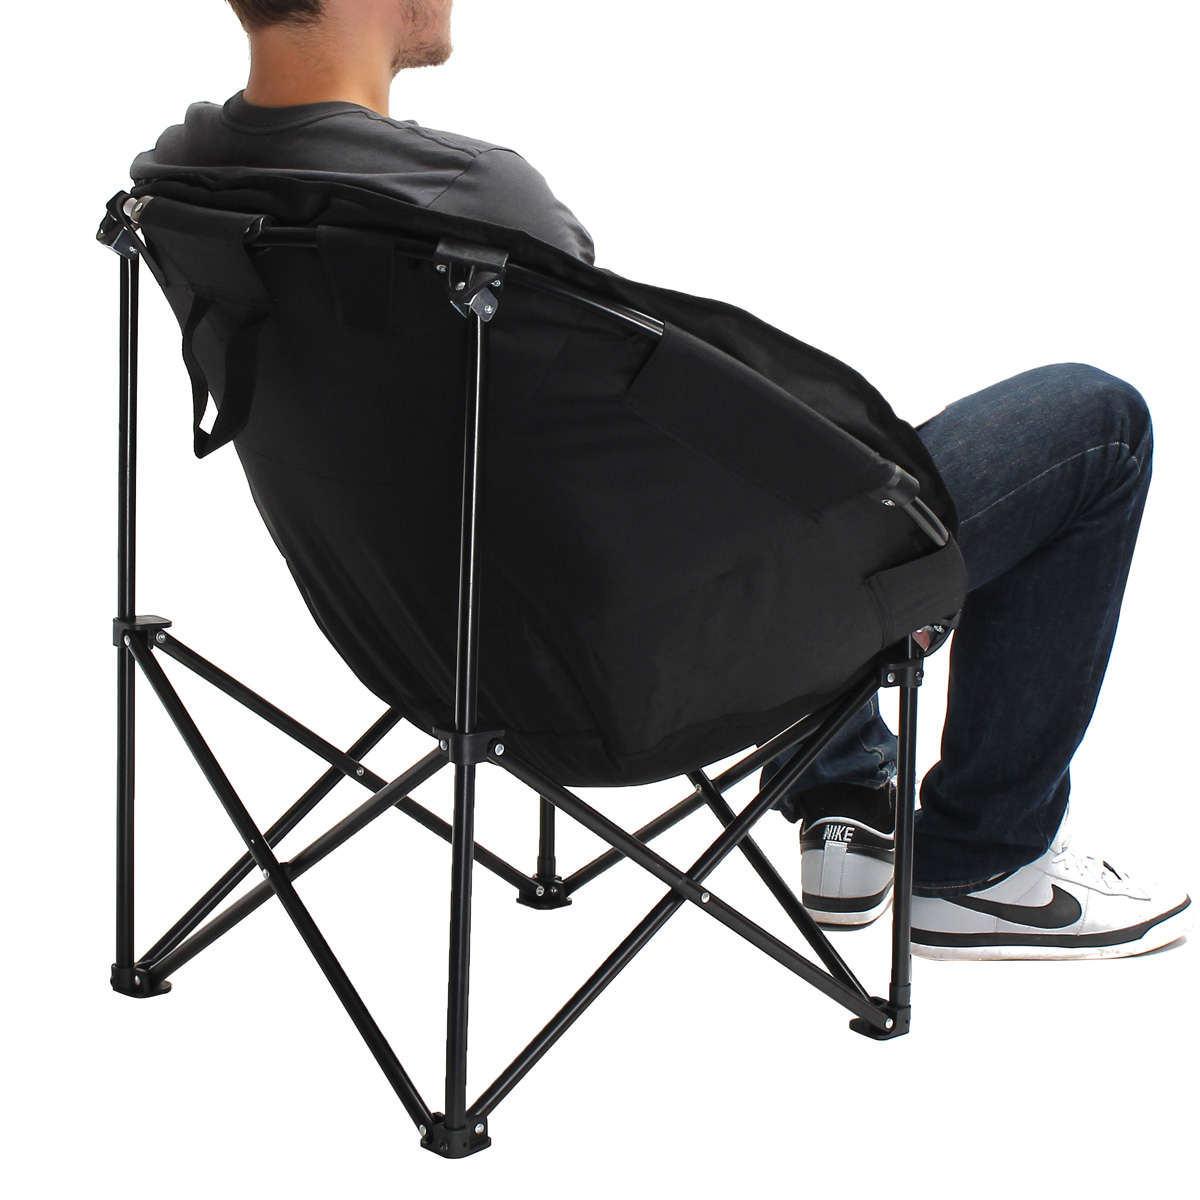 Folding-Chair-Fishing-Camping-Hiking-Picnic-Seat-Portable-Stool-1641645-7